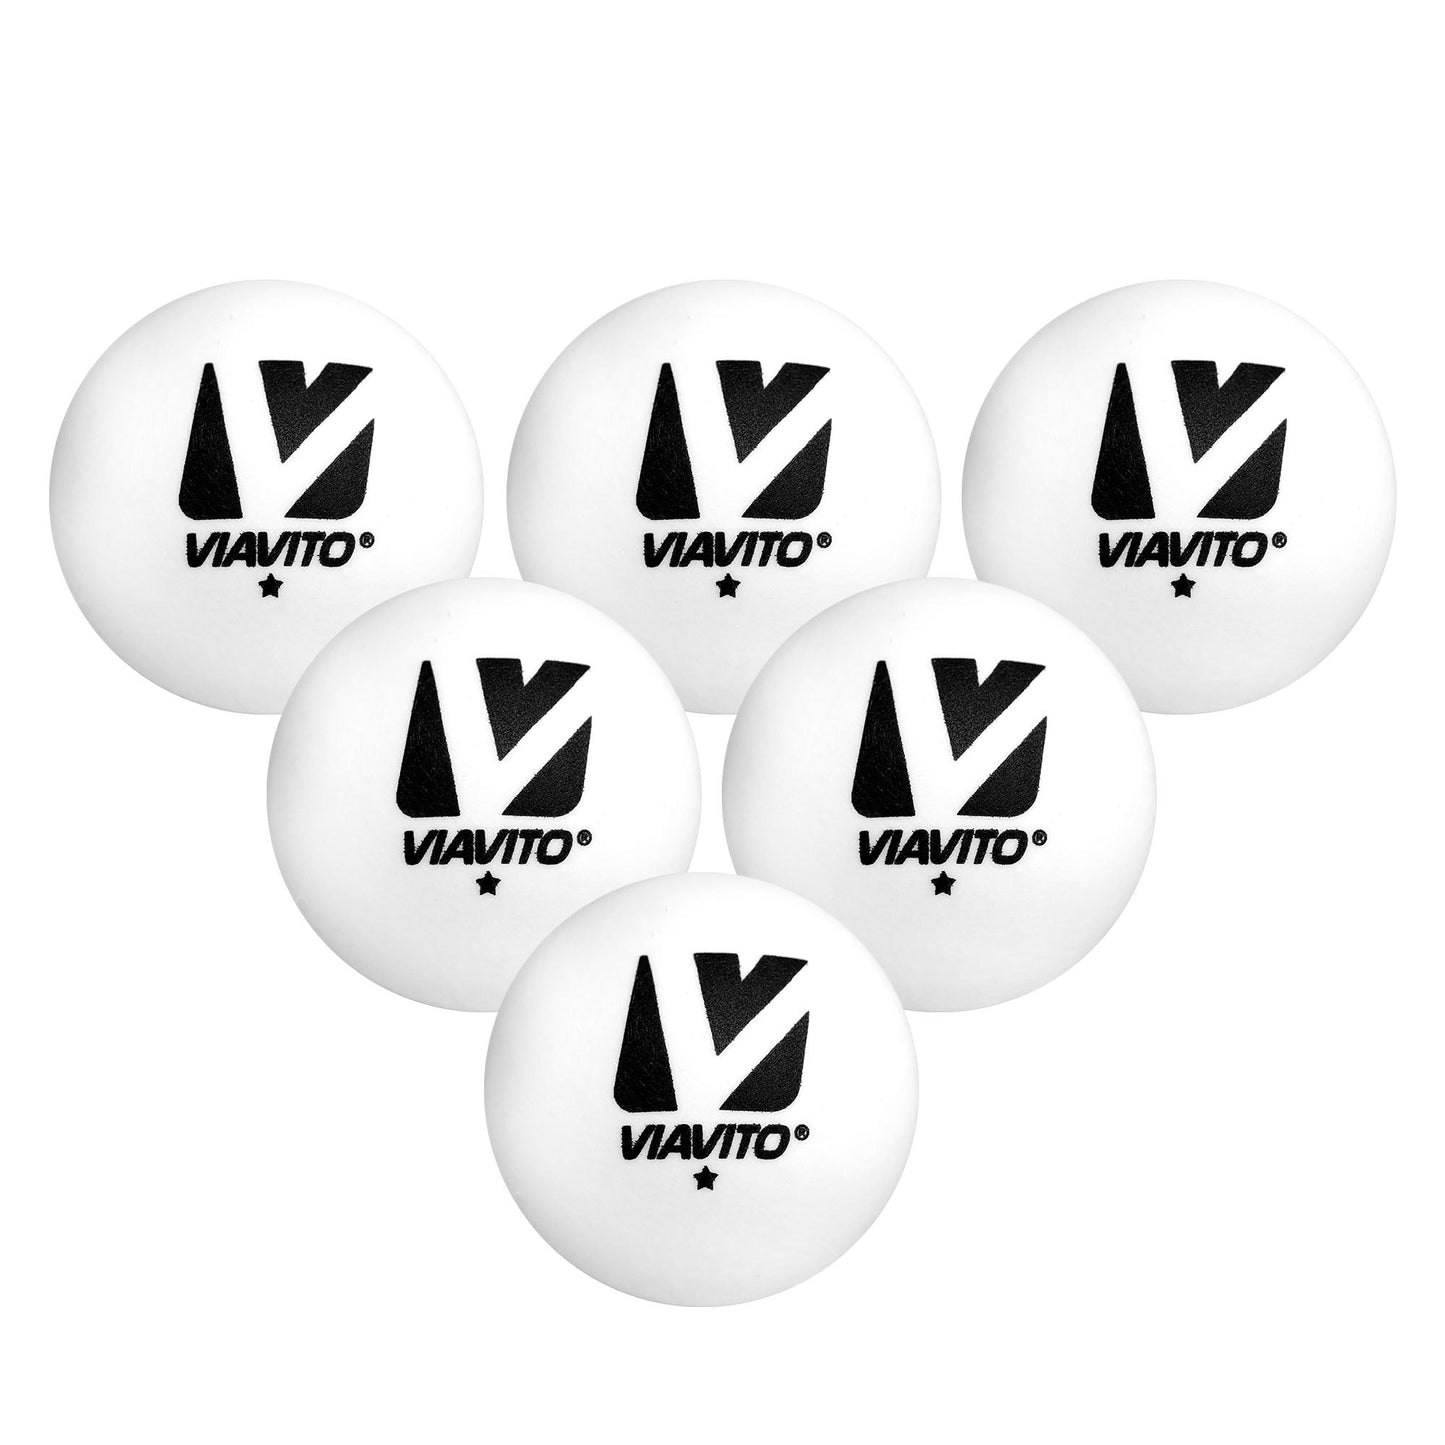 |Viavito Surefire 1 Star Table Tennis Balls - Pack of 6 - New - Balls|